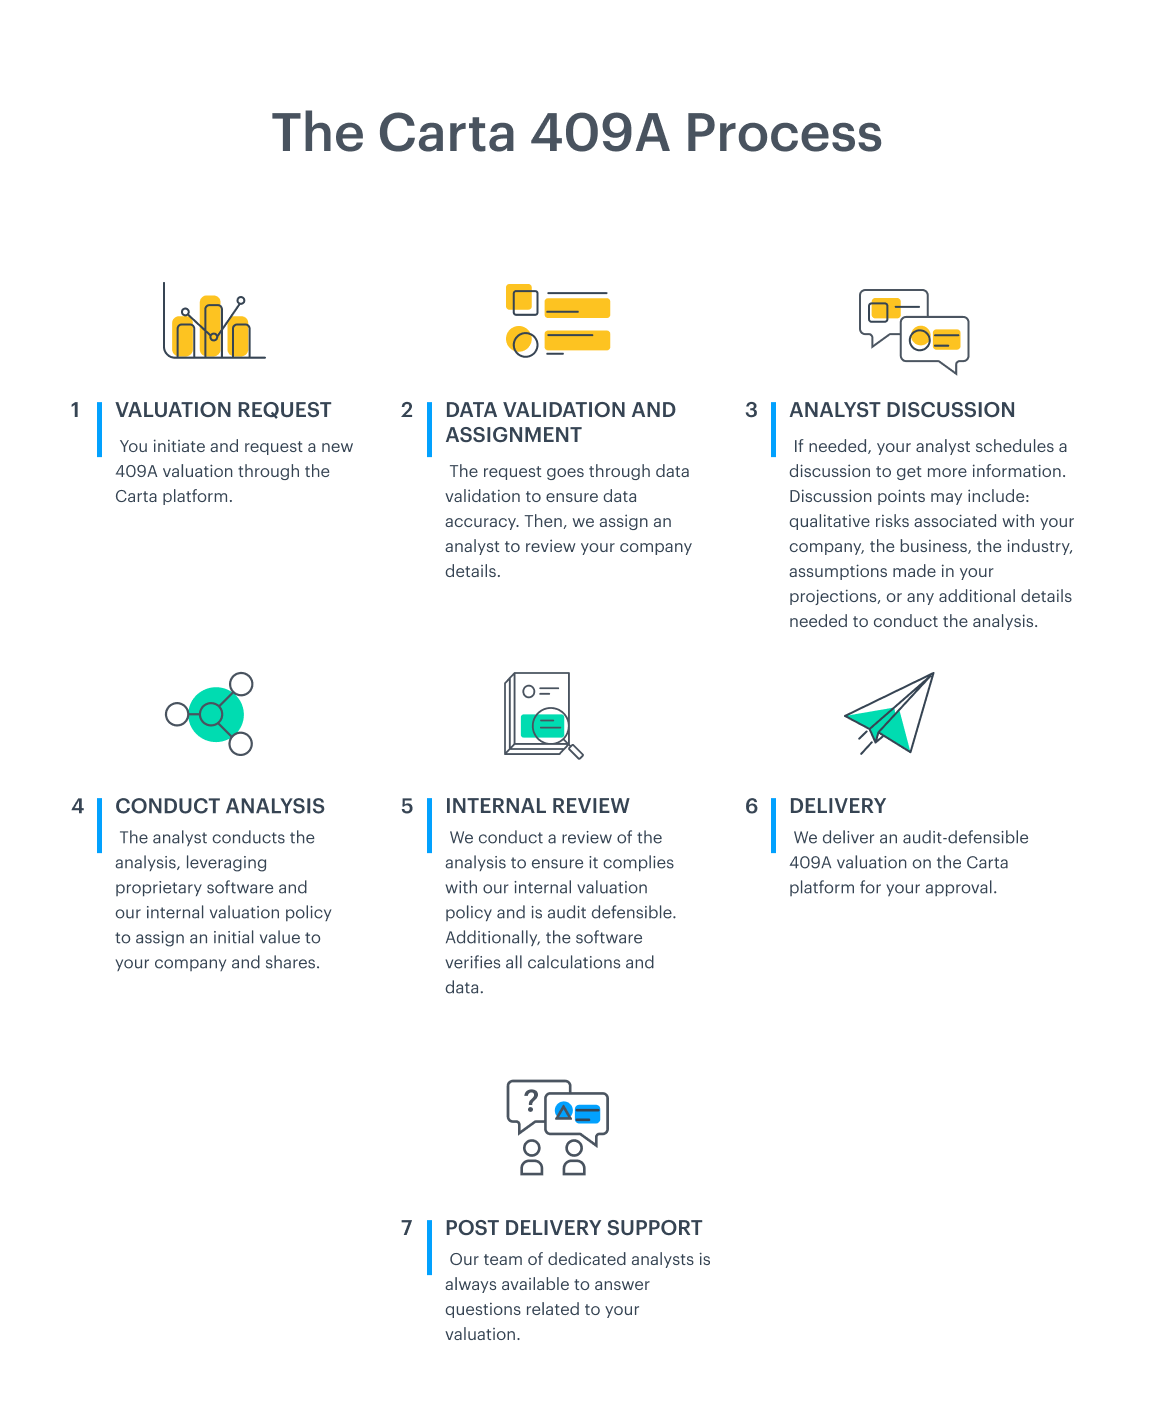 The Carta 409A valuation process